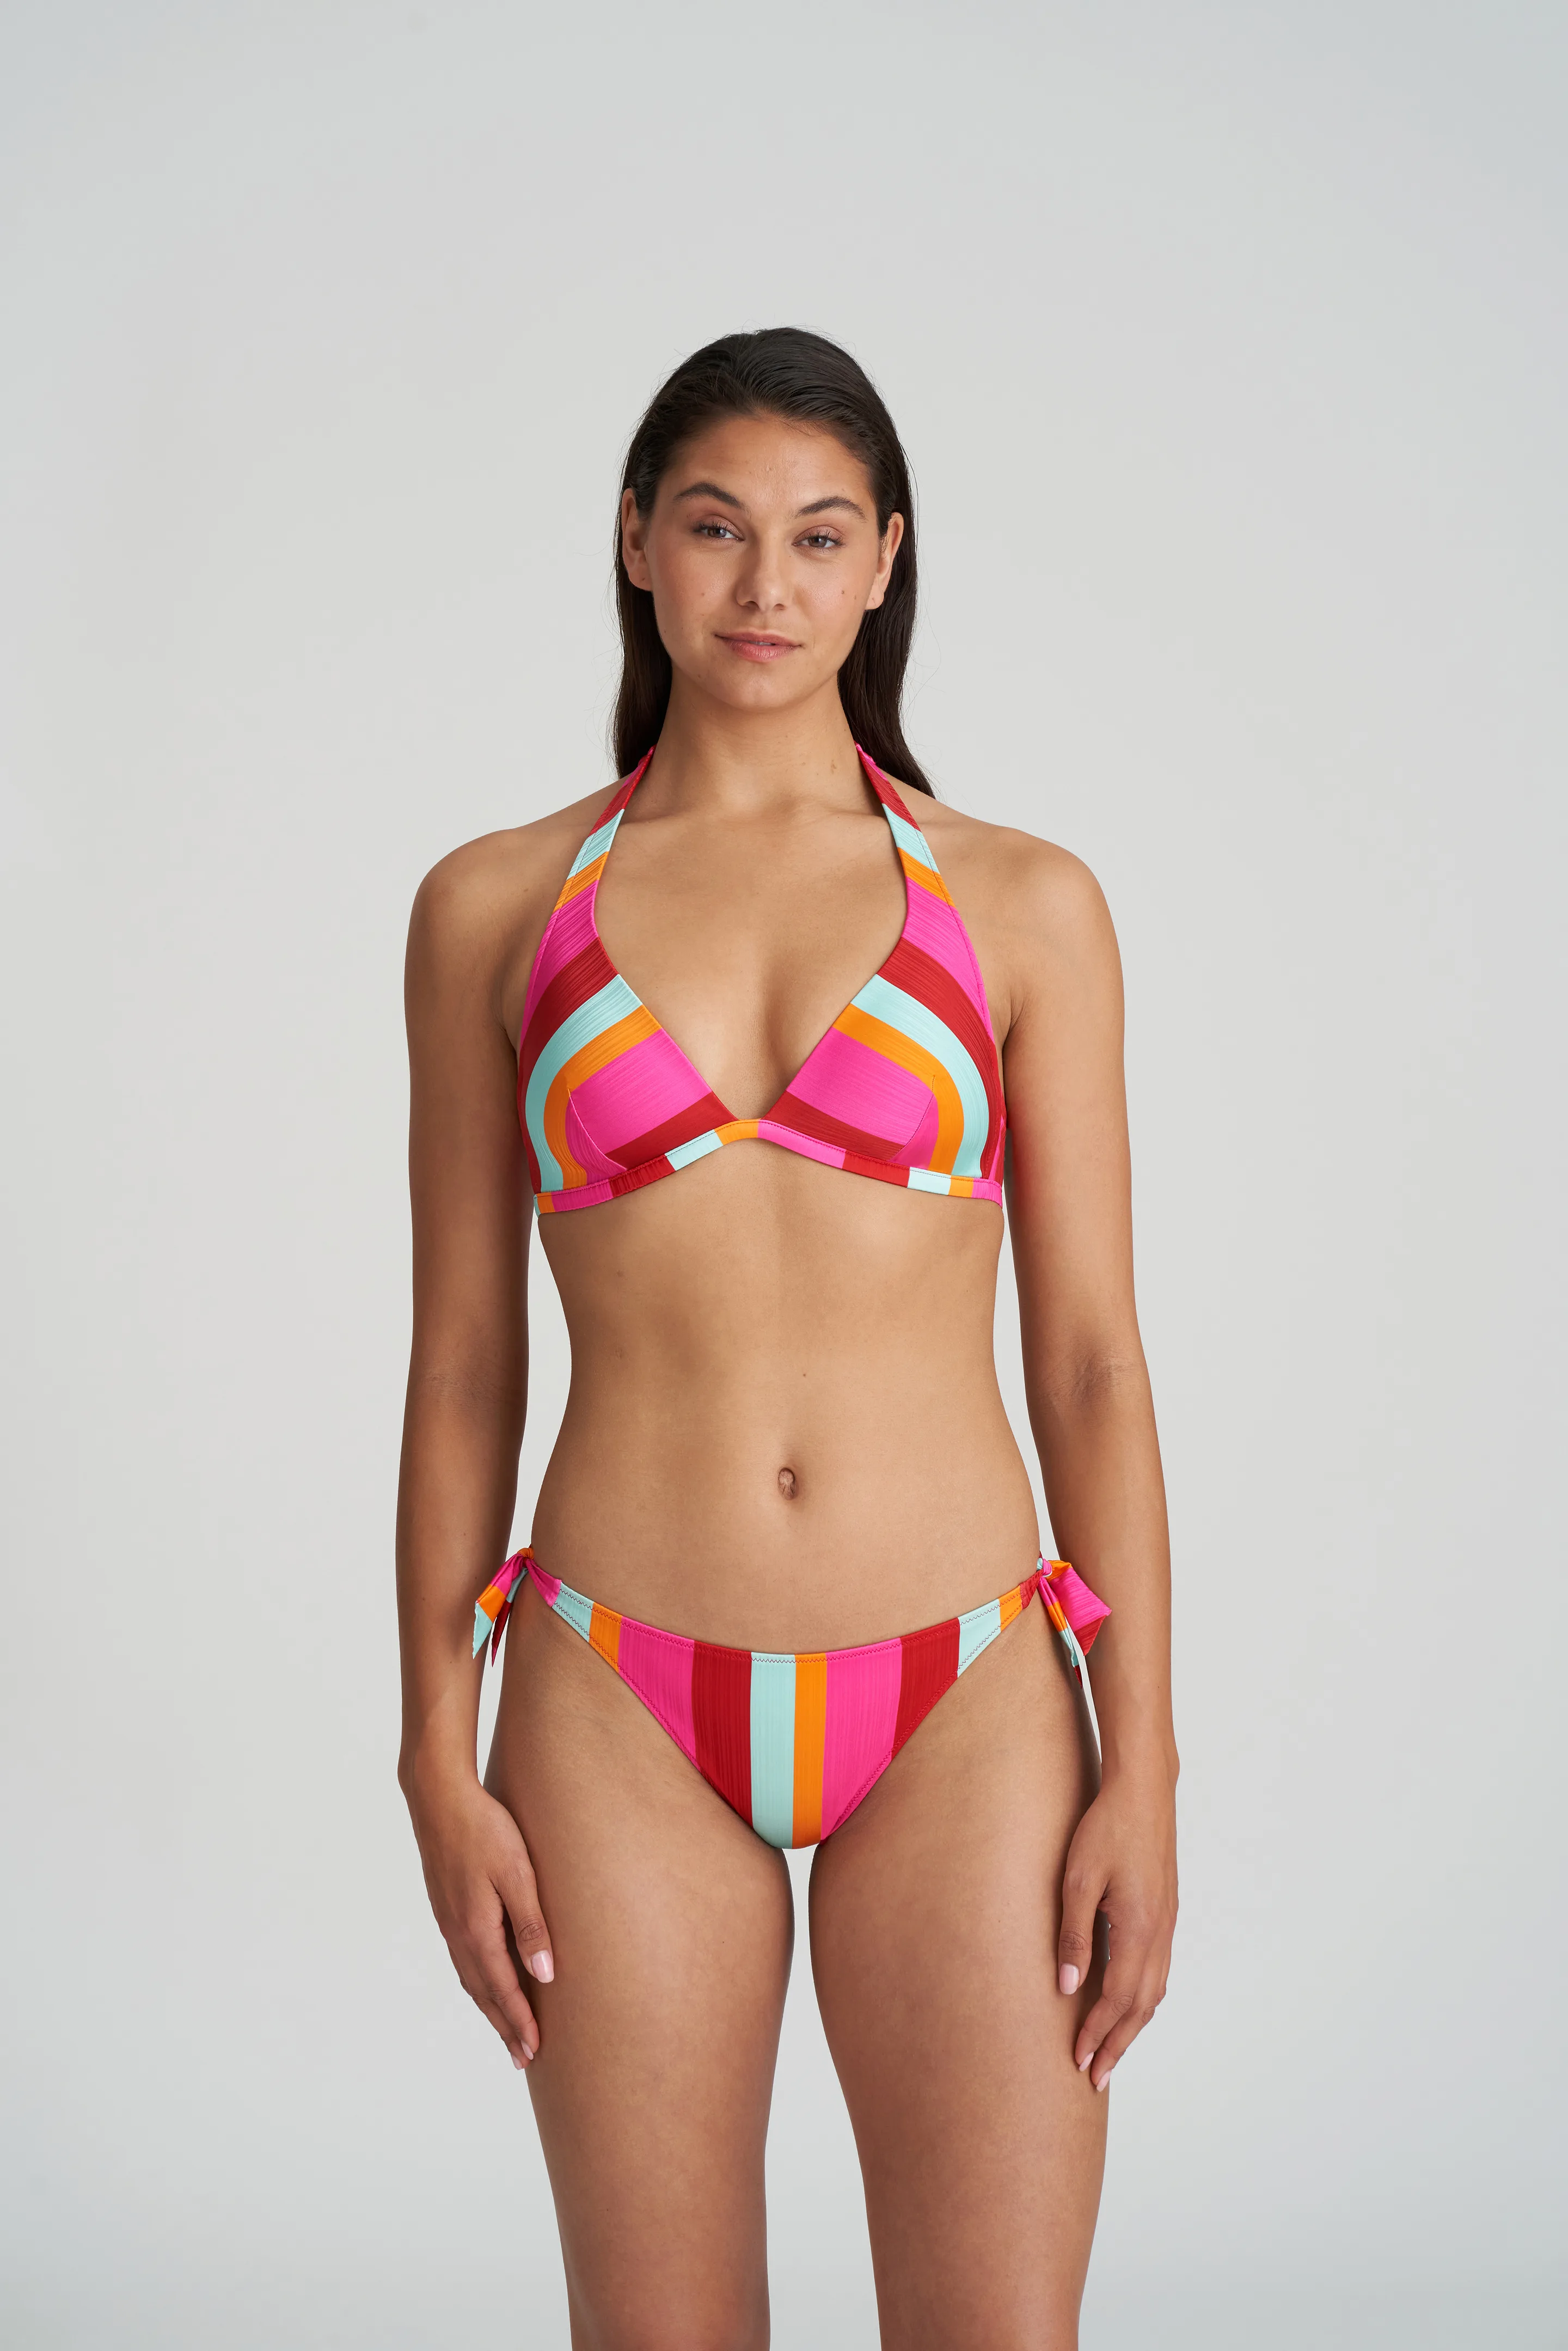 Marie Jo Swim ALMOSHI juicy peach padded triangle bikini top